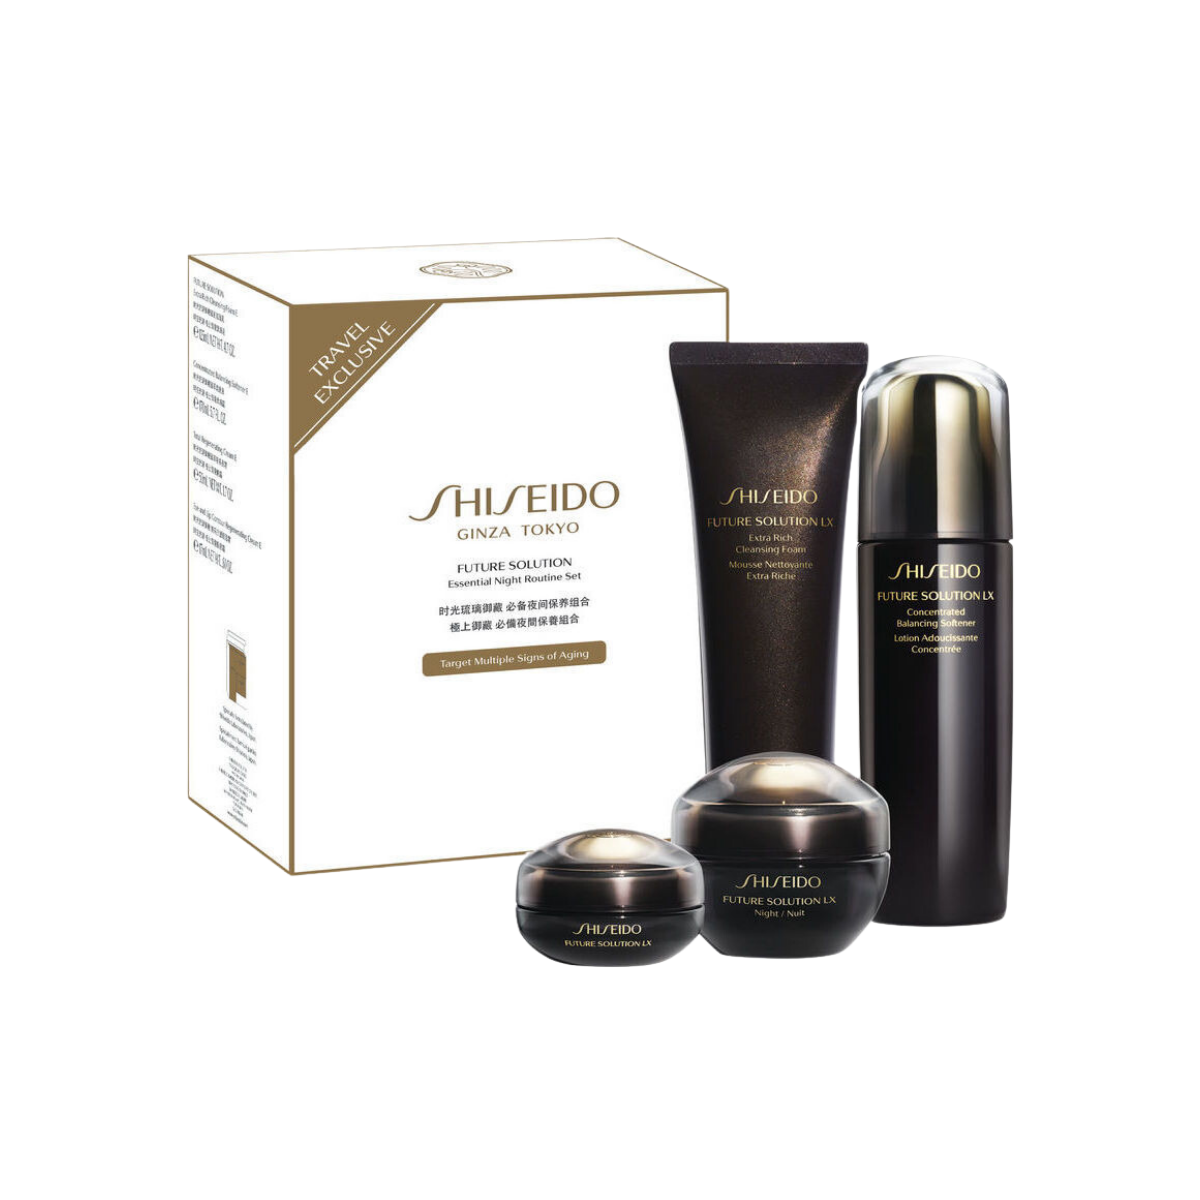 Shiseido Future Solution Essential Night Routine Set